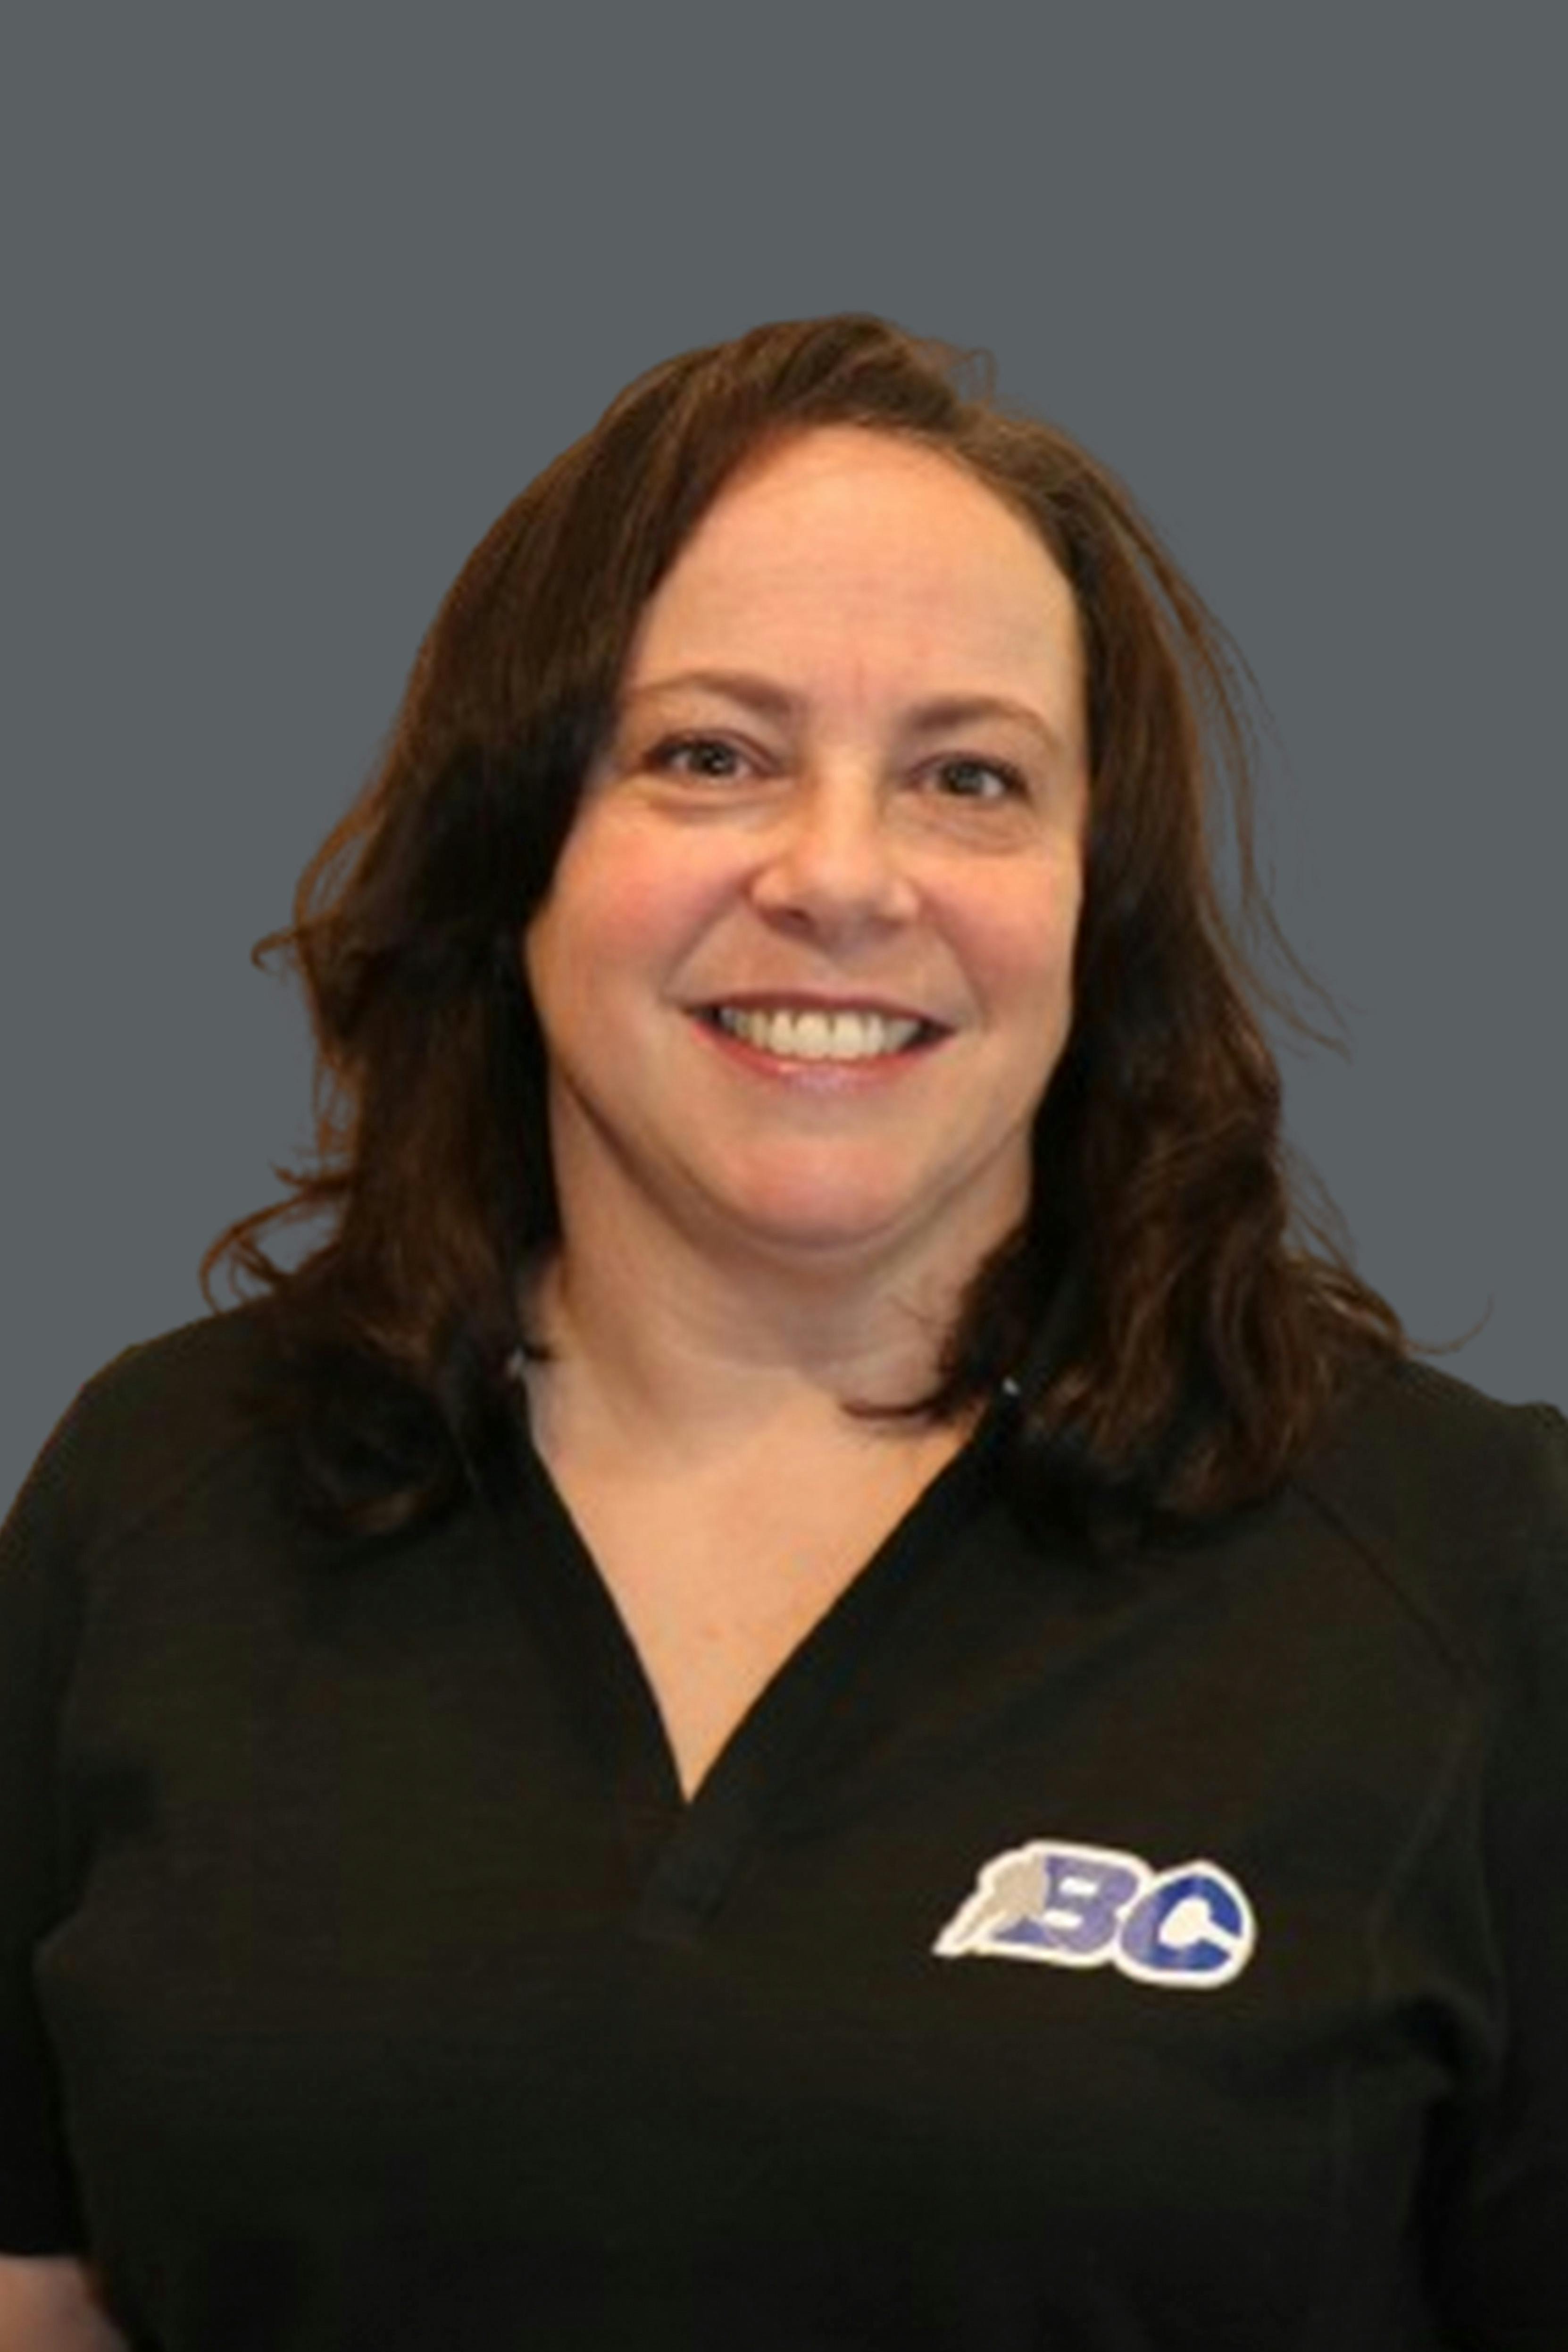 Elisa Greenway - Coordinator, Member Services